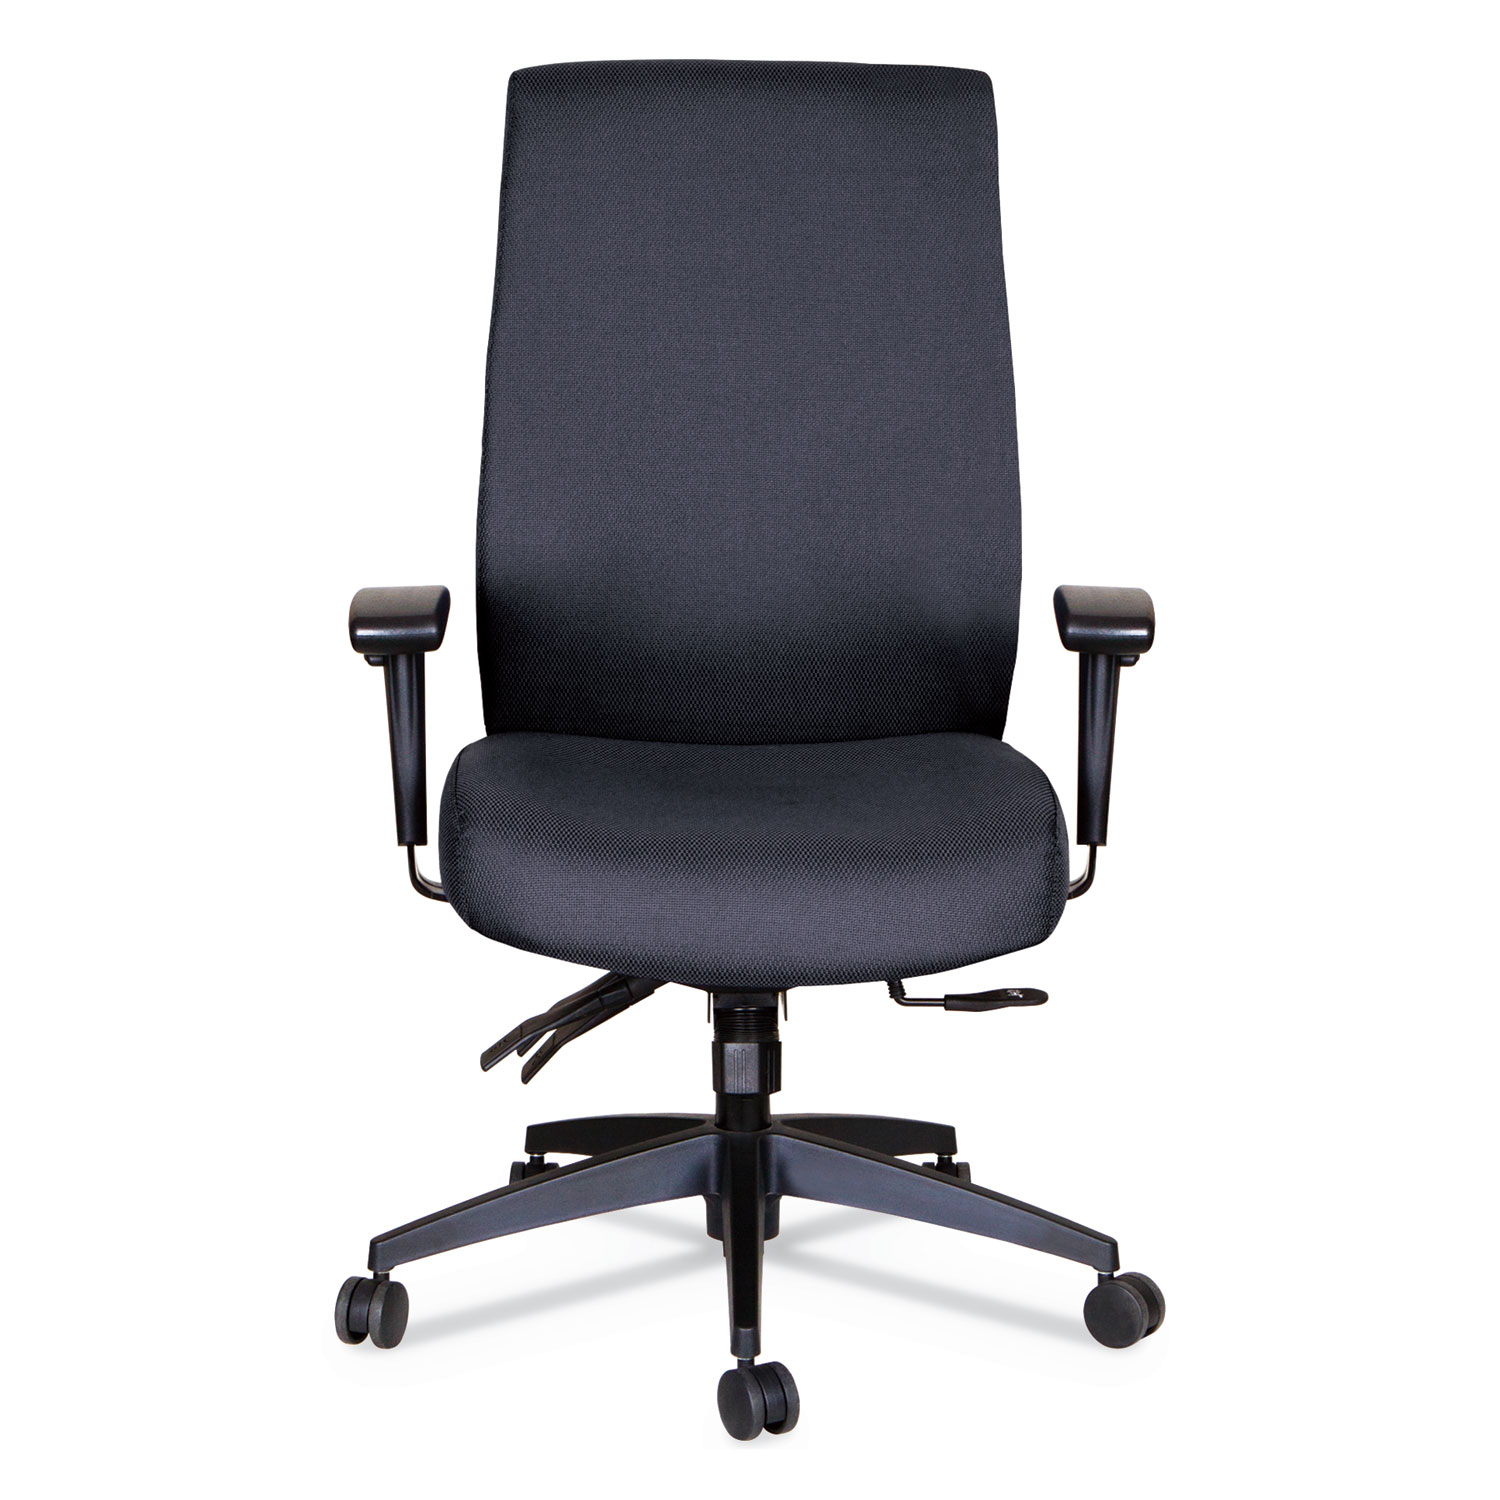 Alera Wrigley Series 24/7 High Performance High-Back Multifunction Task Chair, Up to 300 lbs., Black Seat/Back, Black Base